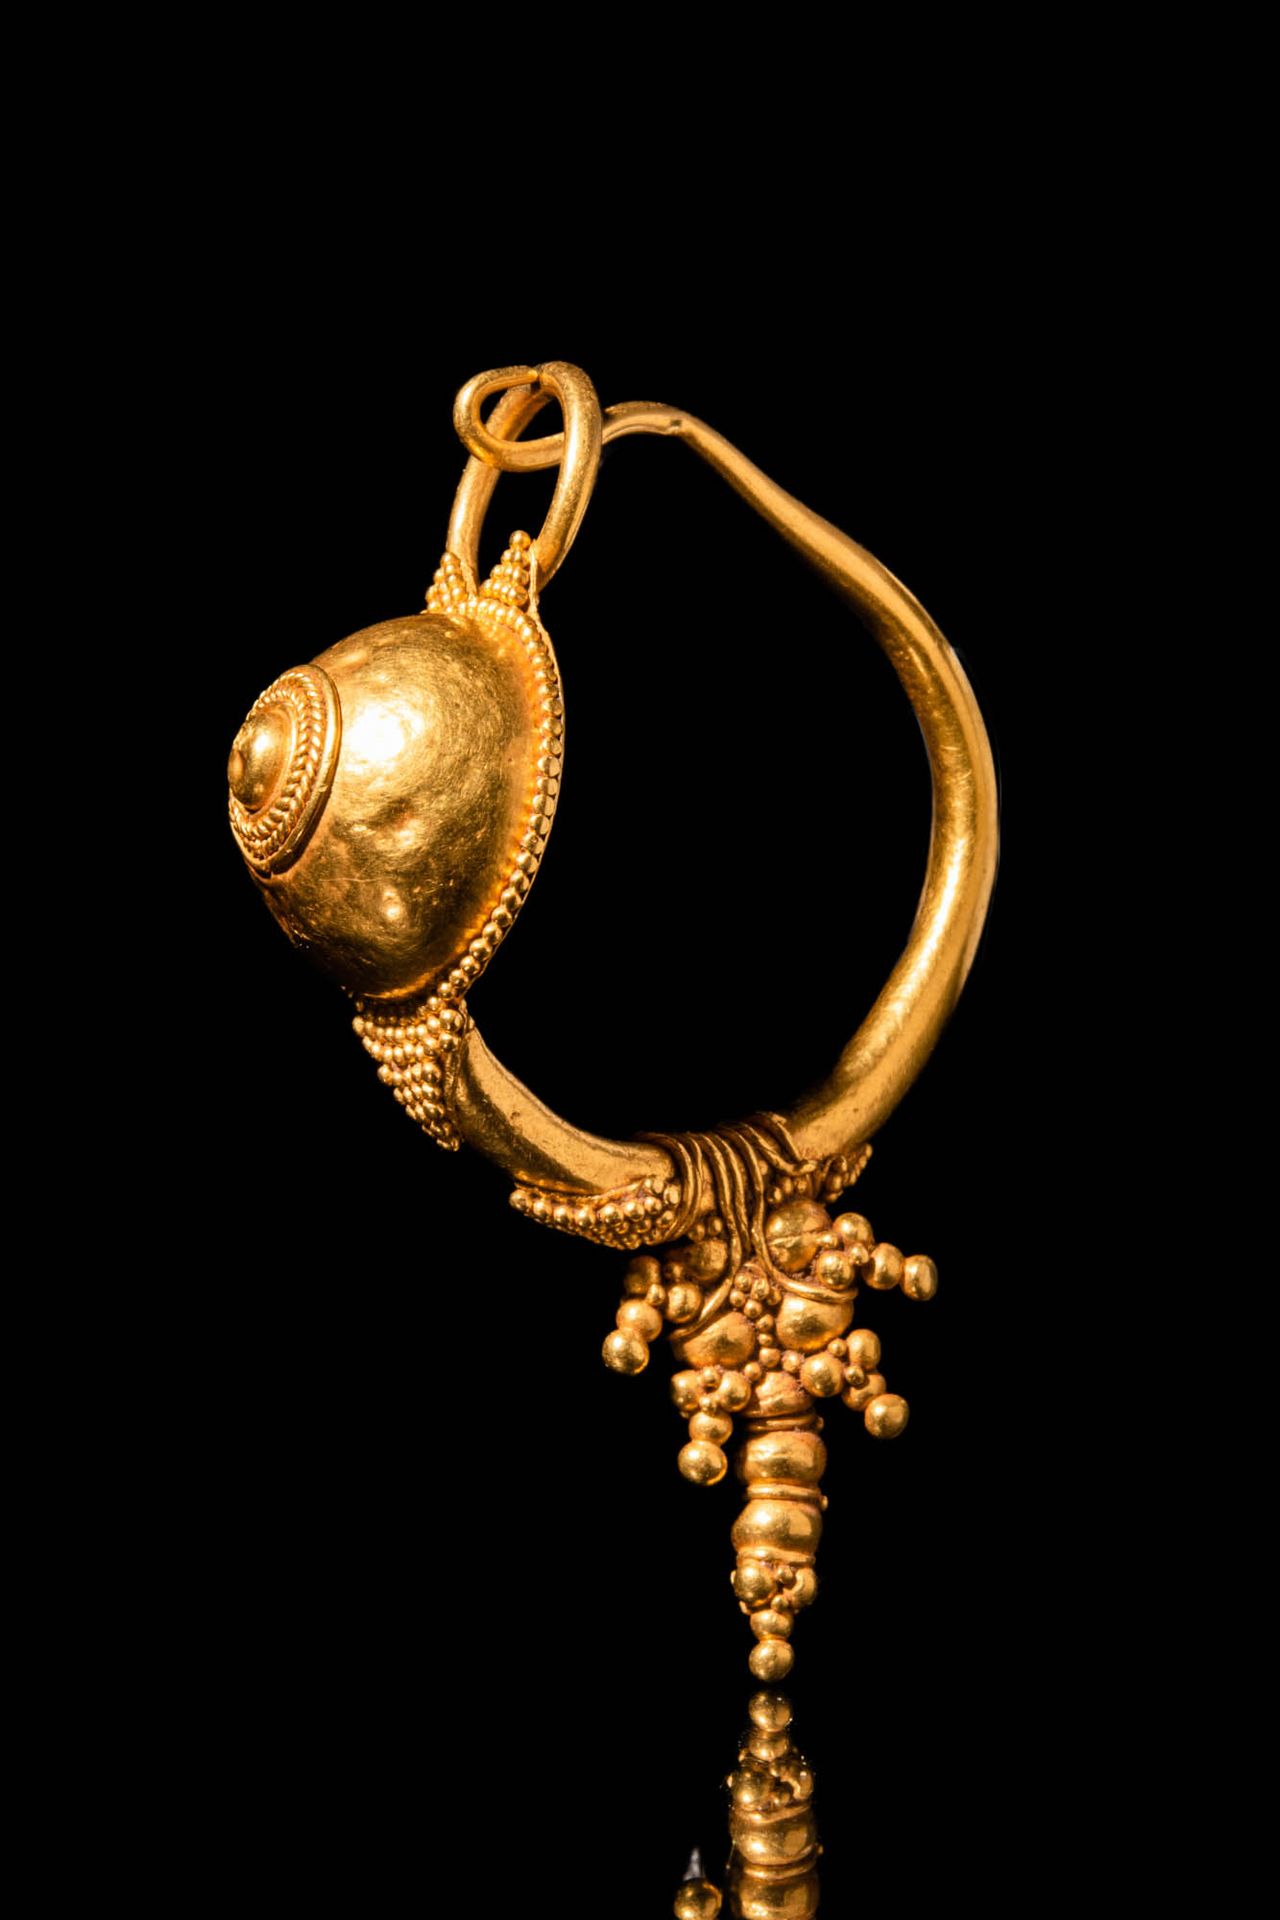 MASSIVE ROMAN GOLD UMBO EARRING - 22 GRAMS 约公元 200 - 300 年。公元 200 - 300 年。
一枚 21&hellip;